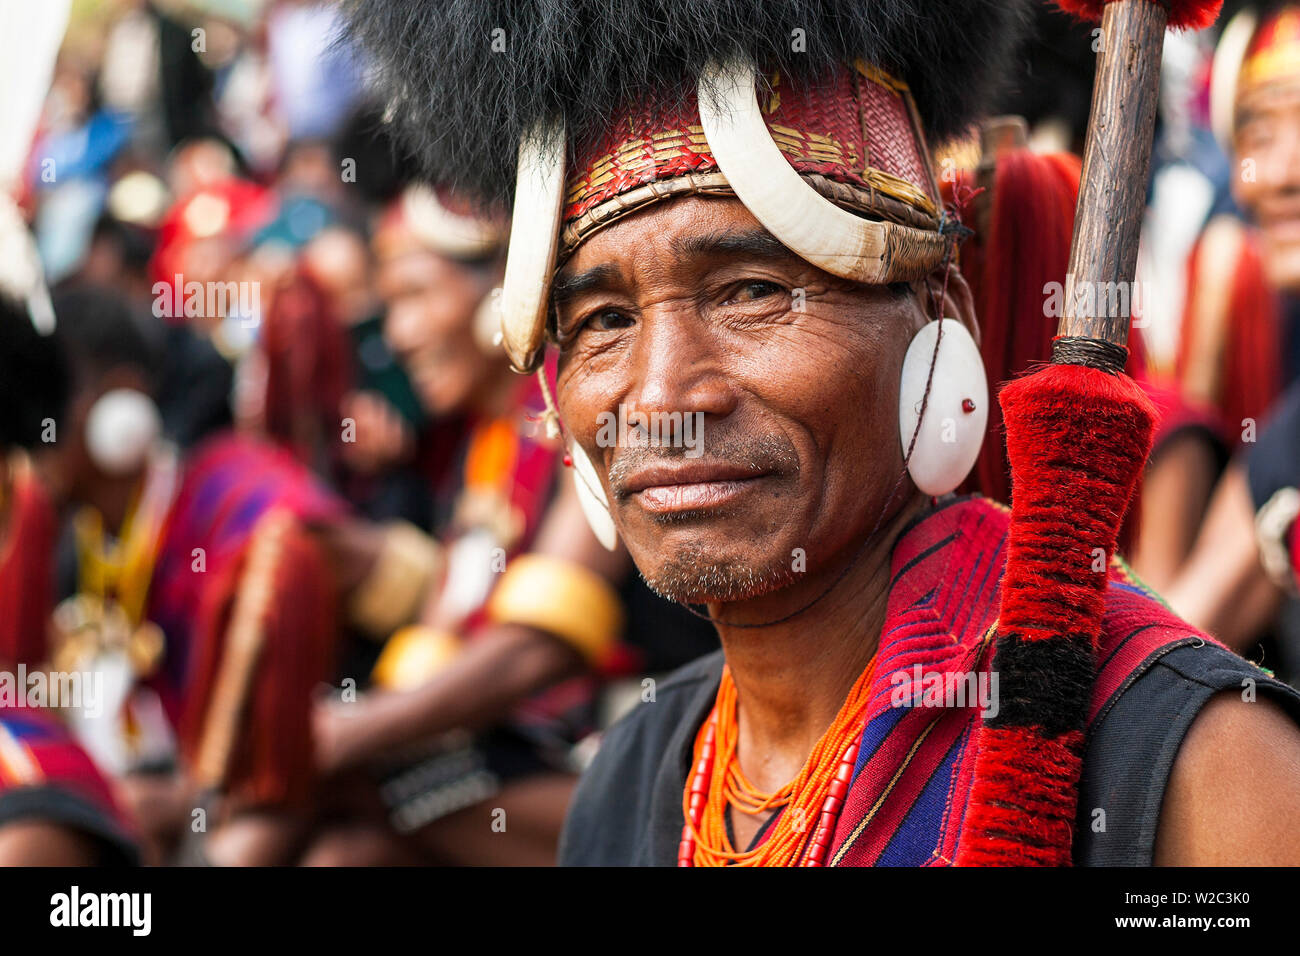 Portrait of Chang tribesman, Hornbill Festival, Nagaland, N.E. India Stock Photo